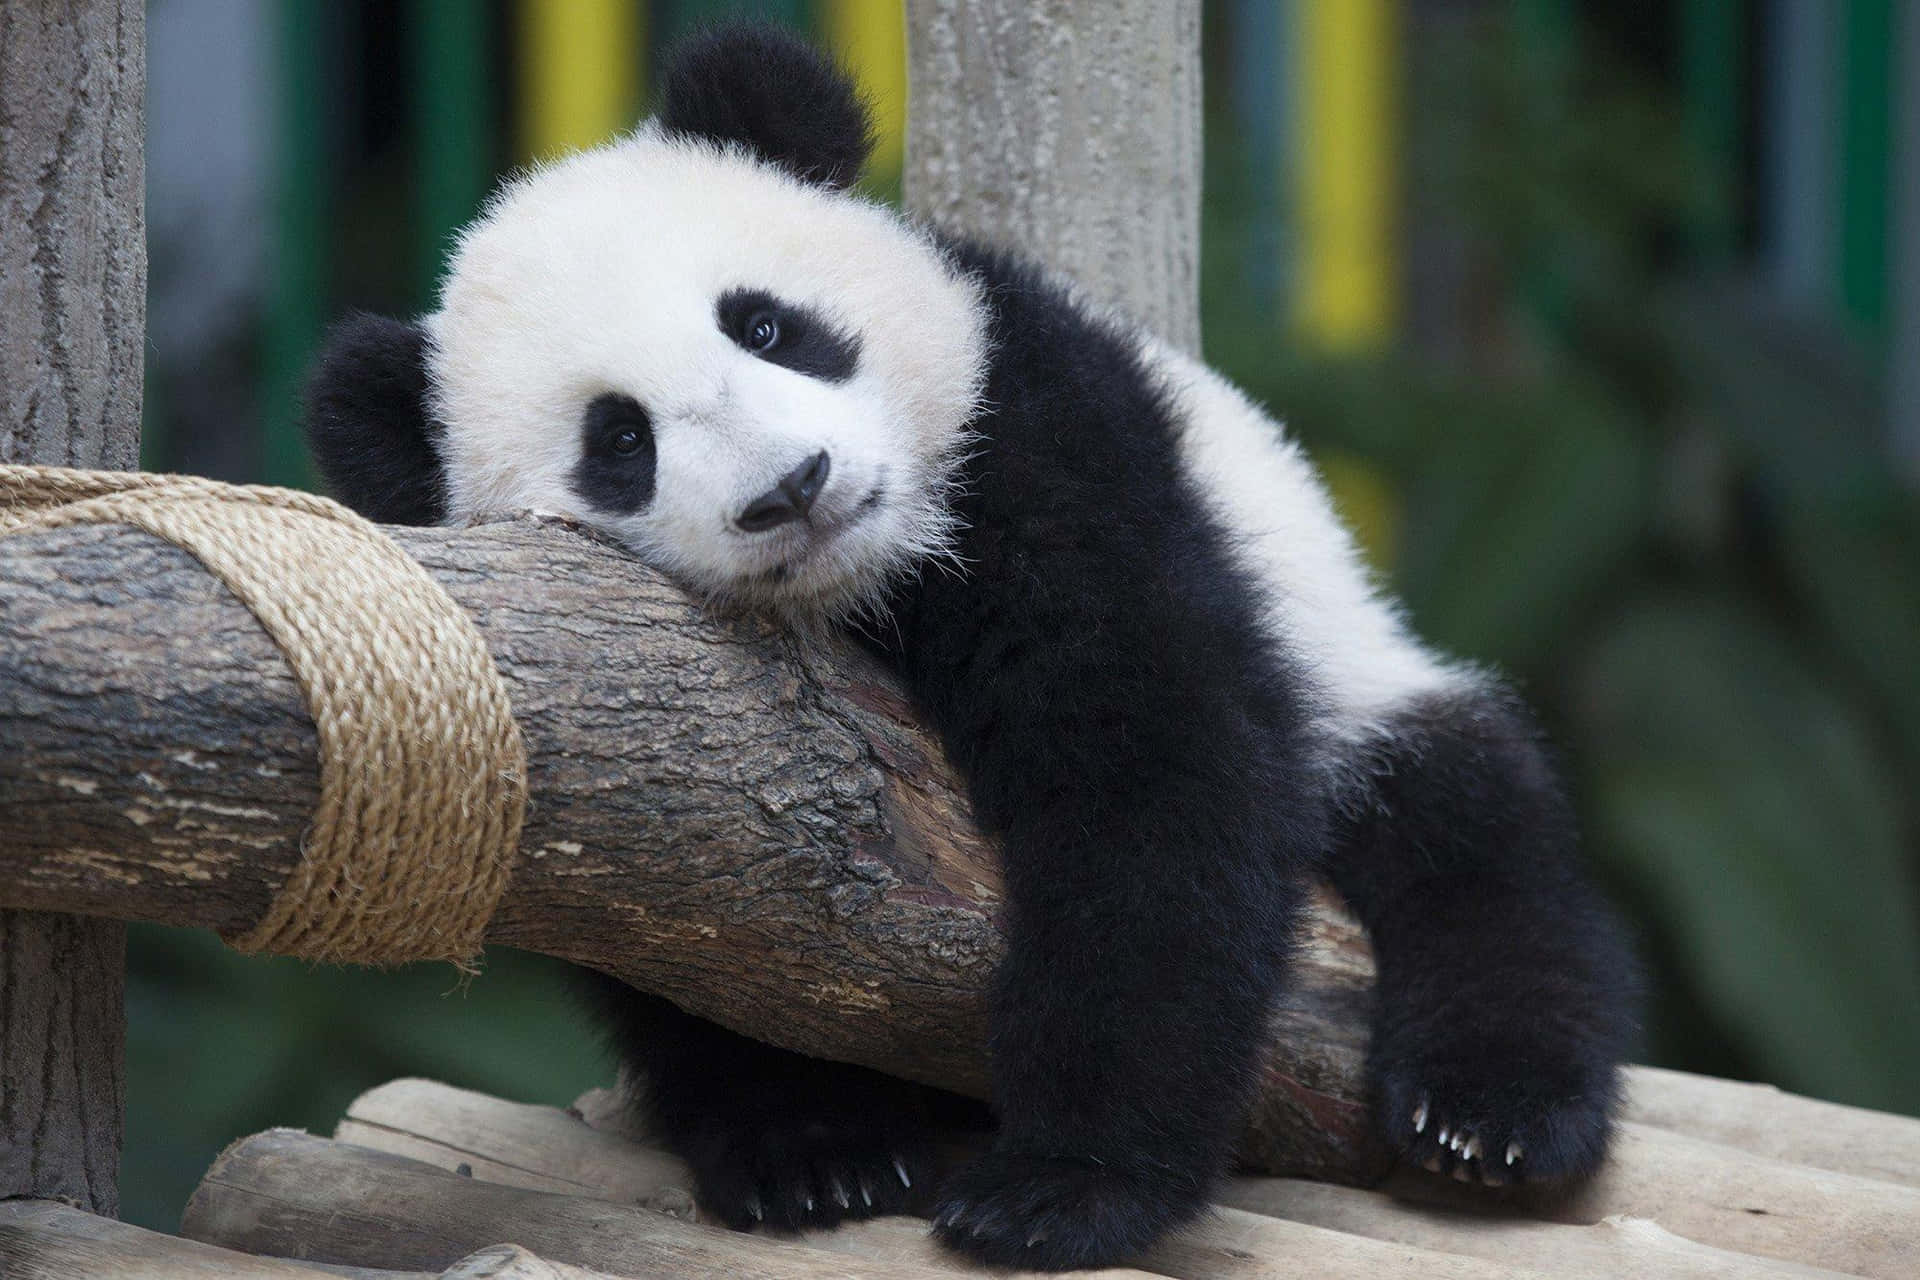 Cute panda looking for a hug